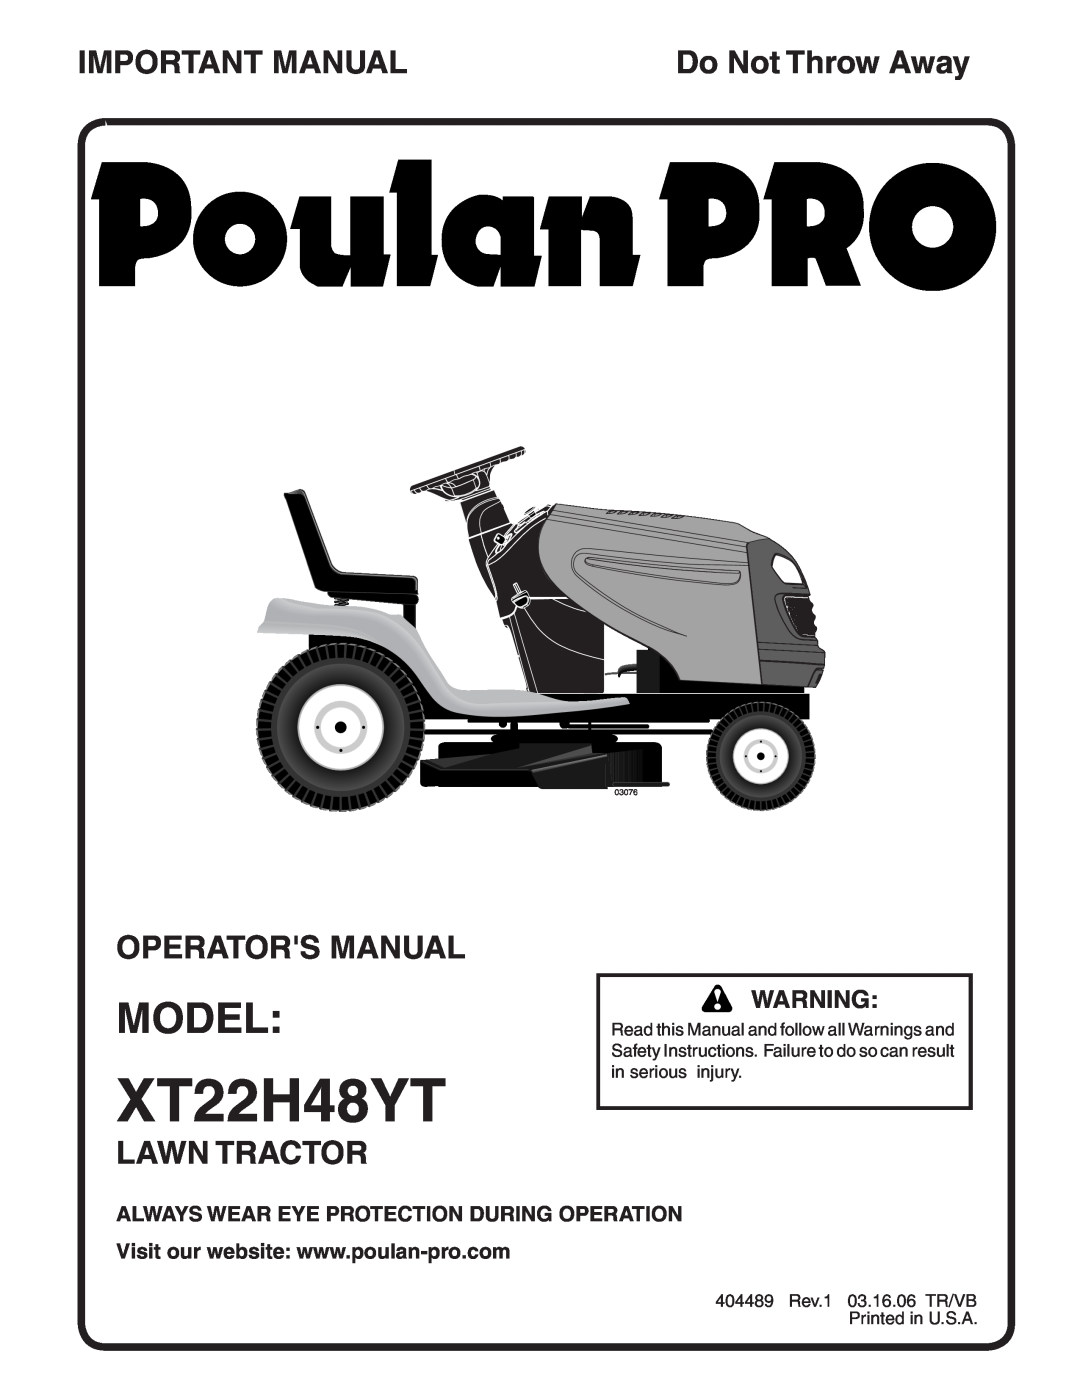 Poulan XT22H48YT manual Model, Important Manual, Operators Manual, Lawn Tractor, Do Not Throw Away, 03076 